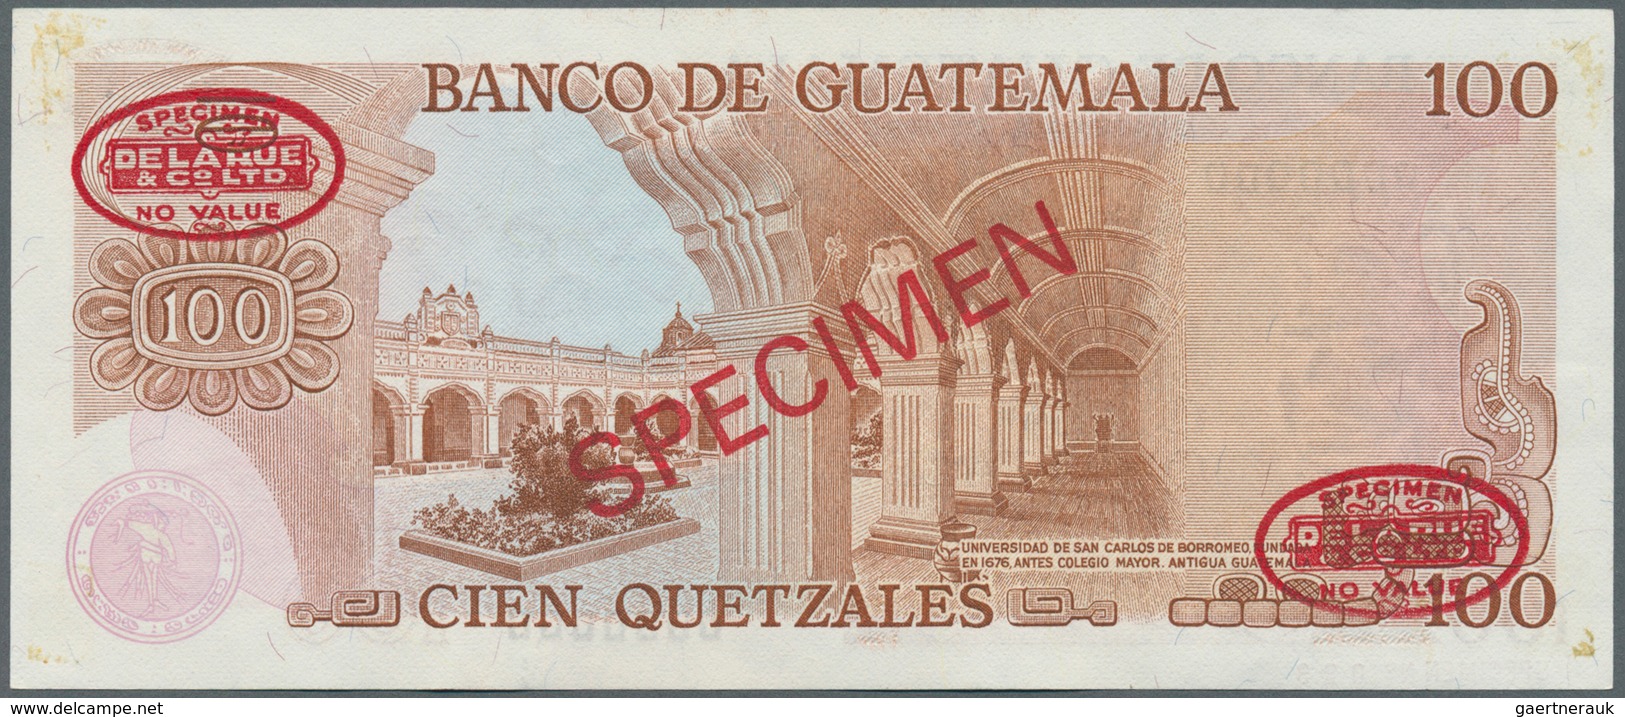 01658 Guatemala: Banco De Guatemala 100 Quetzales 1972-83 TDLR Specimen, P.64s, Traces Of Glue On Back, Ot - Guatemala